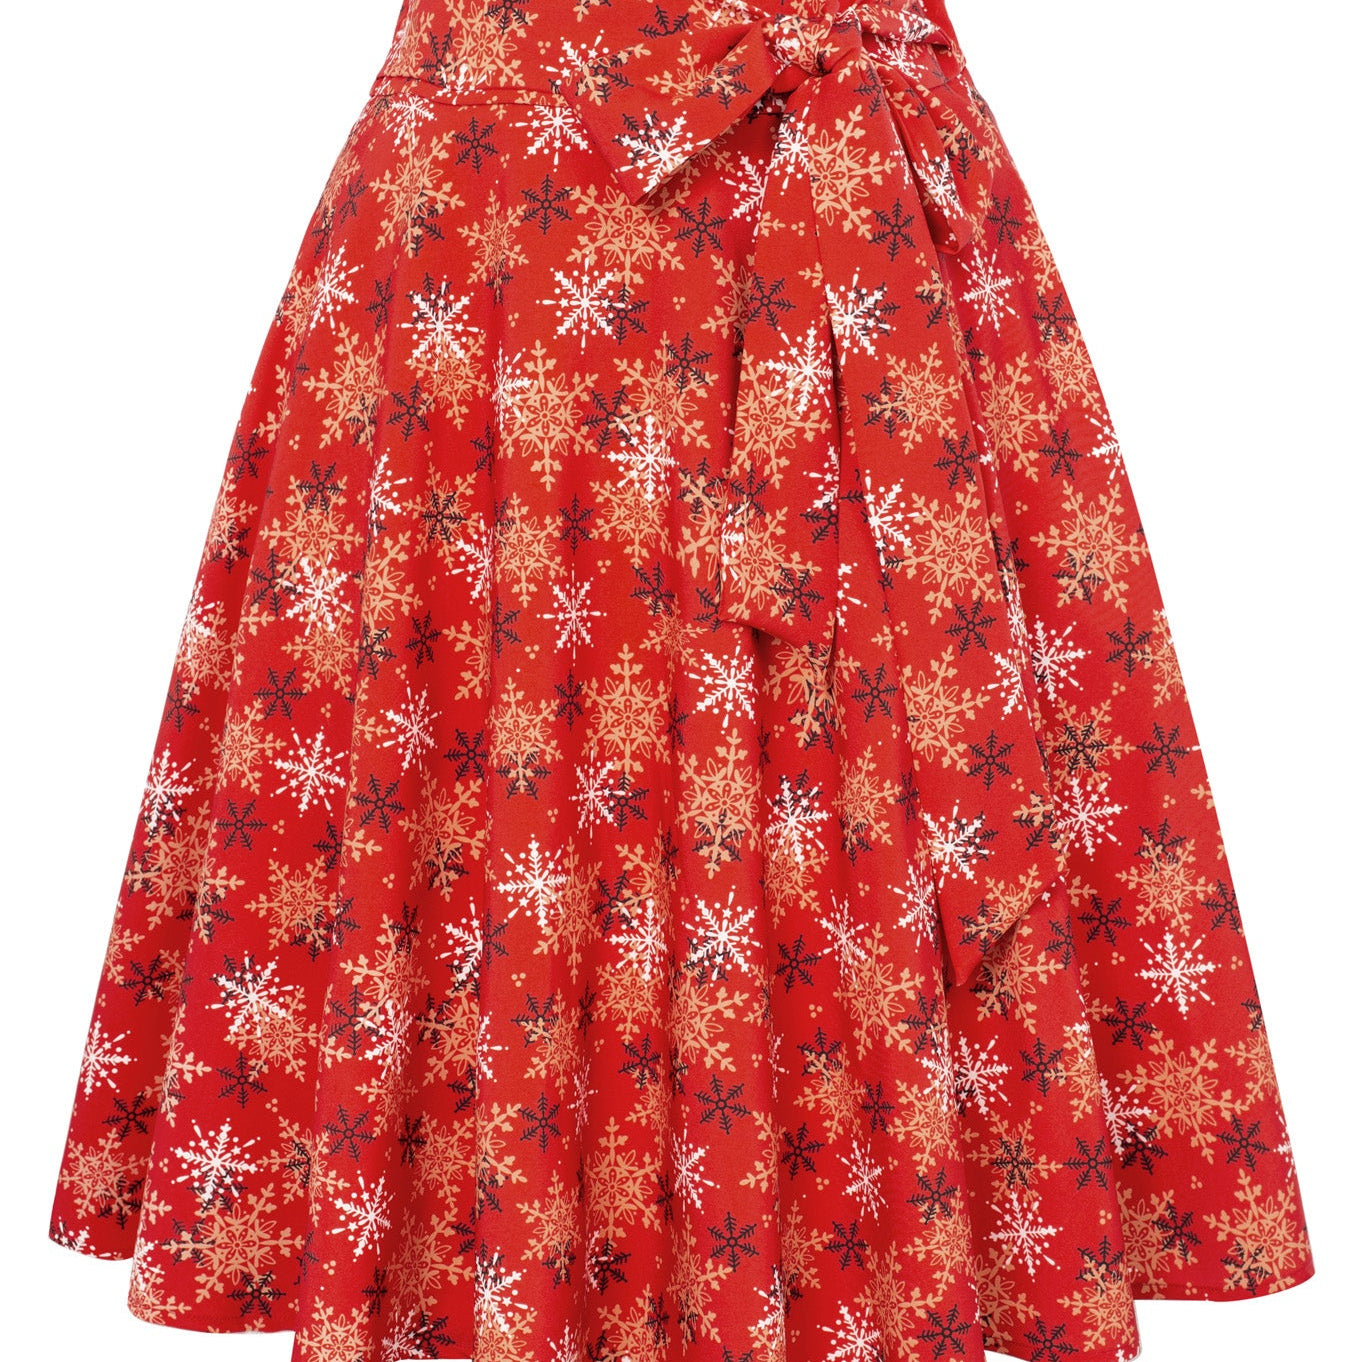 Vintage Cherry Patterns High Waist A-Line Pockets Skirt Skater Flared Midi Skirts